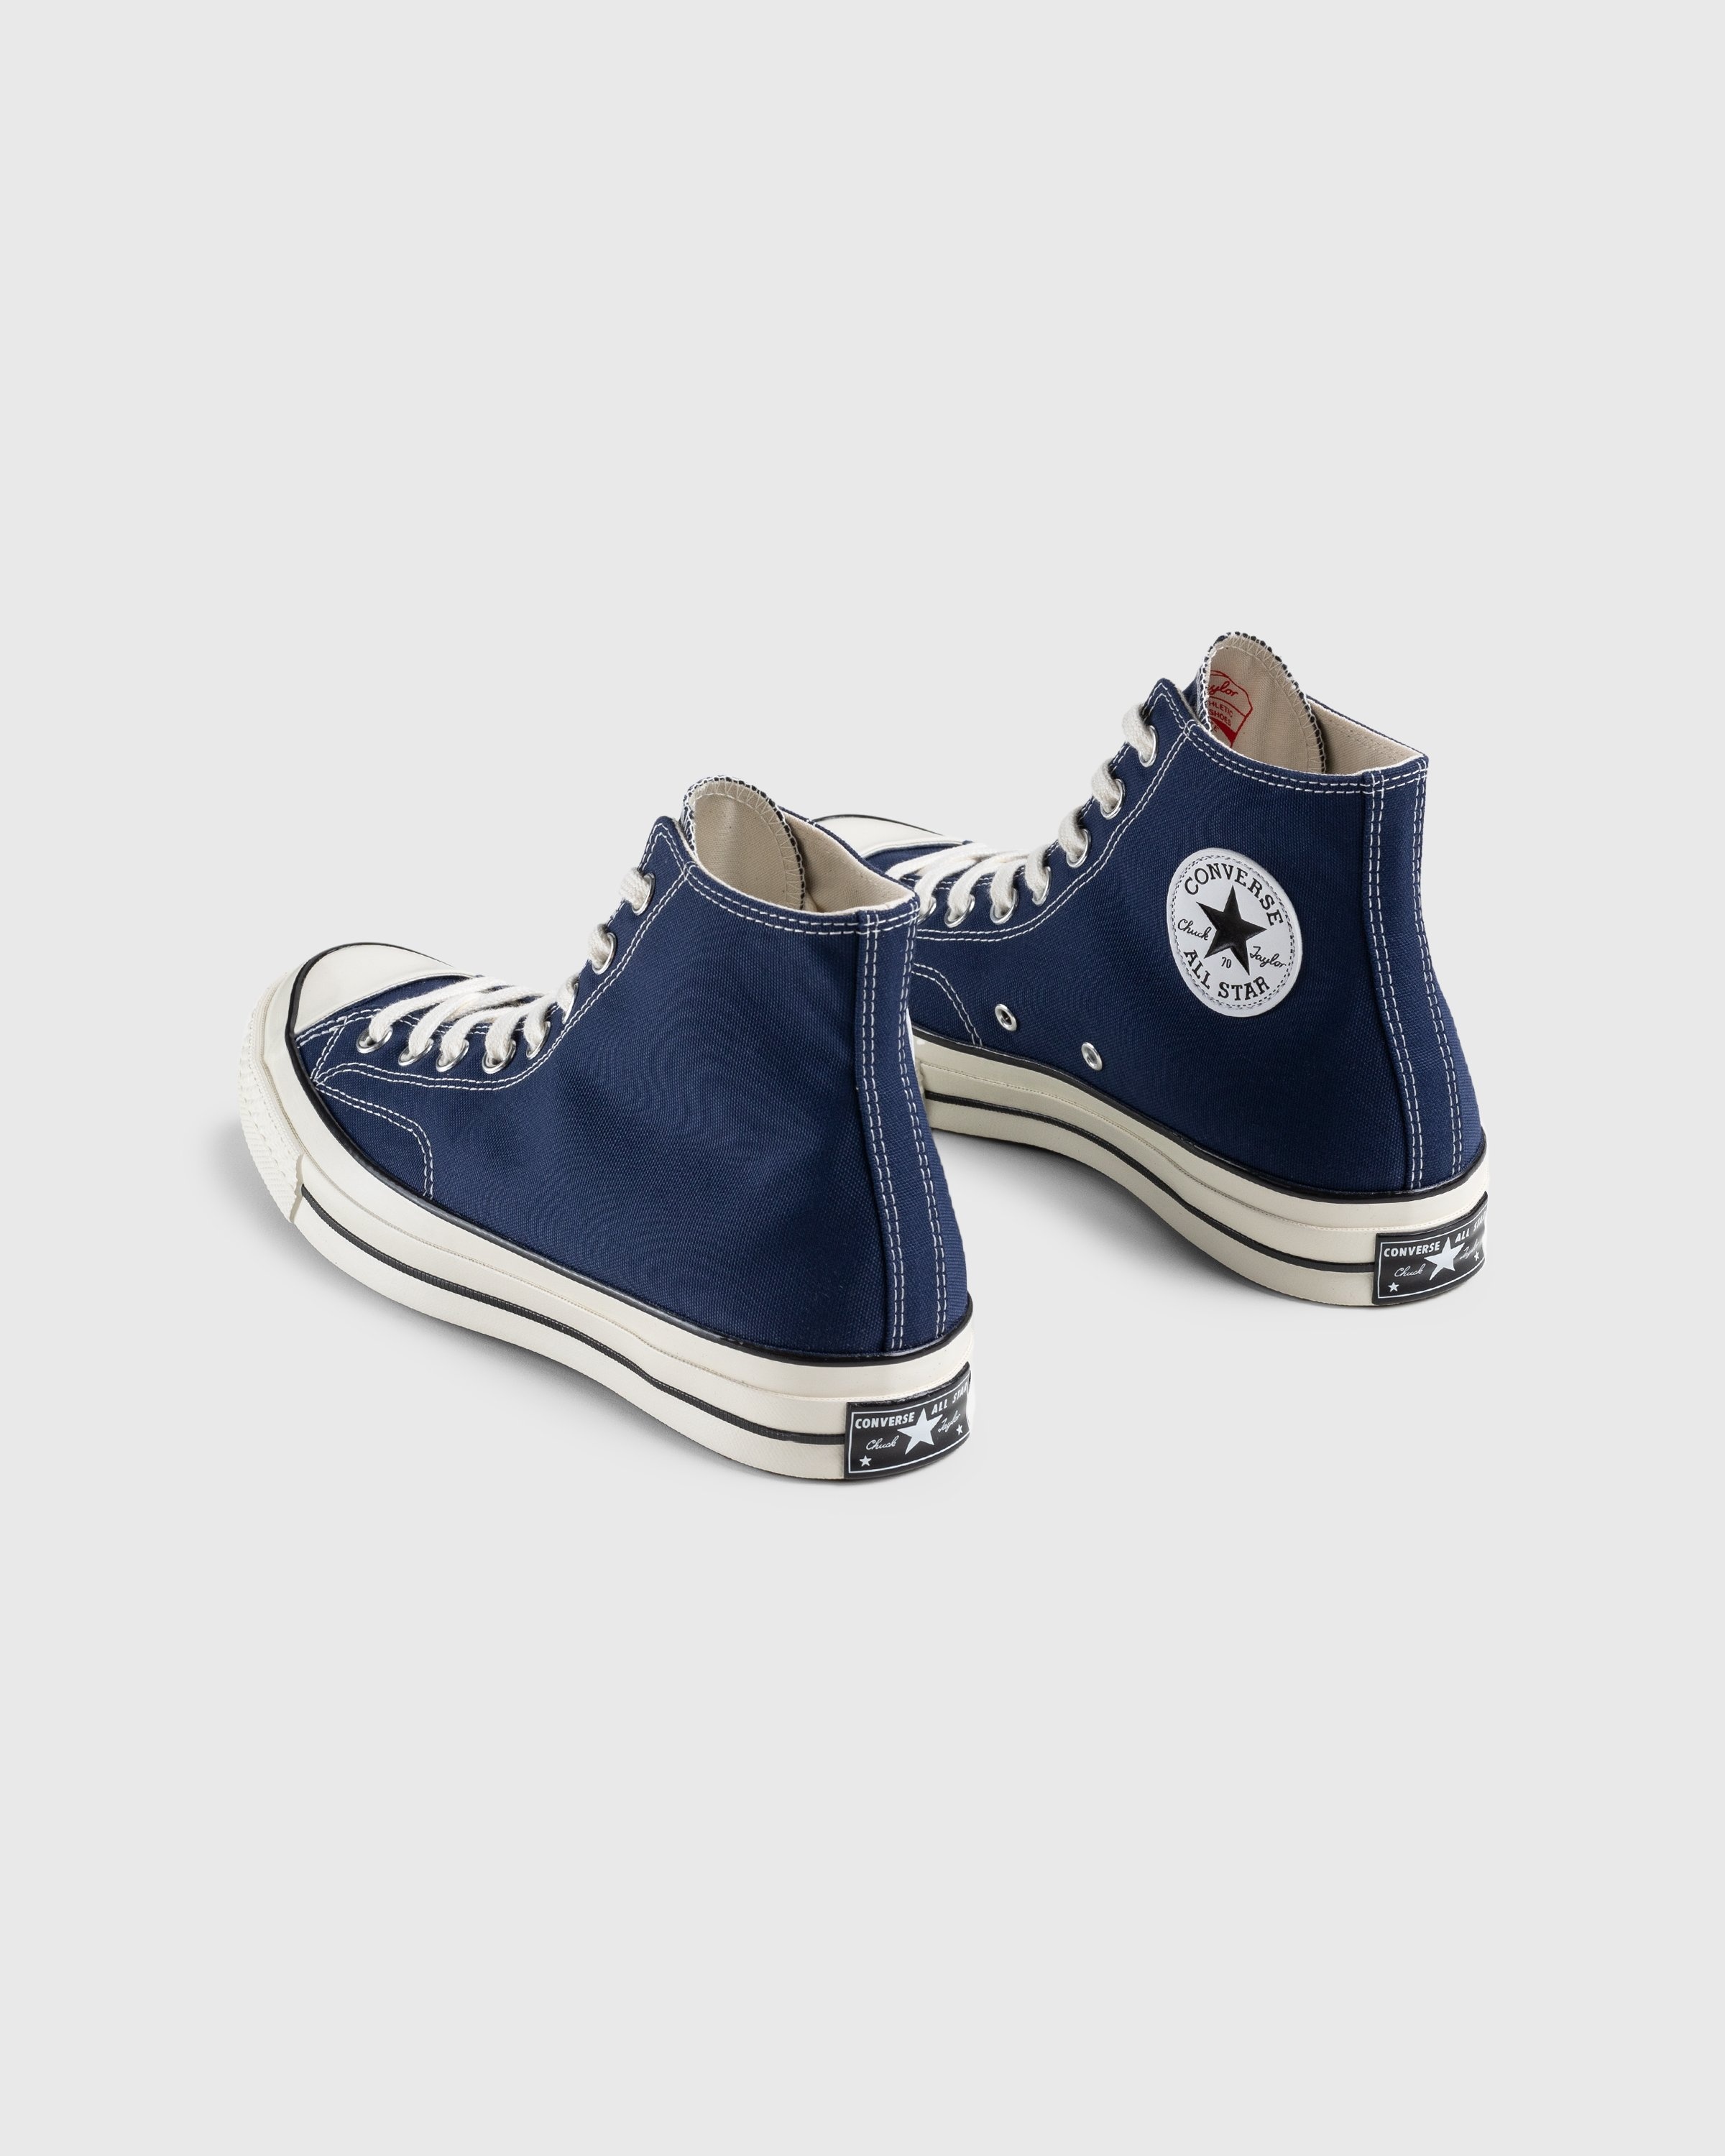 Converse – Chuck 70 Hi Midnight Navy/Egret/Black - High Top Sneakers - Blue - Image 4